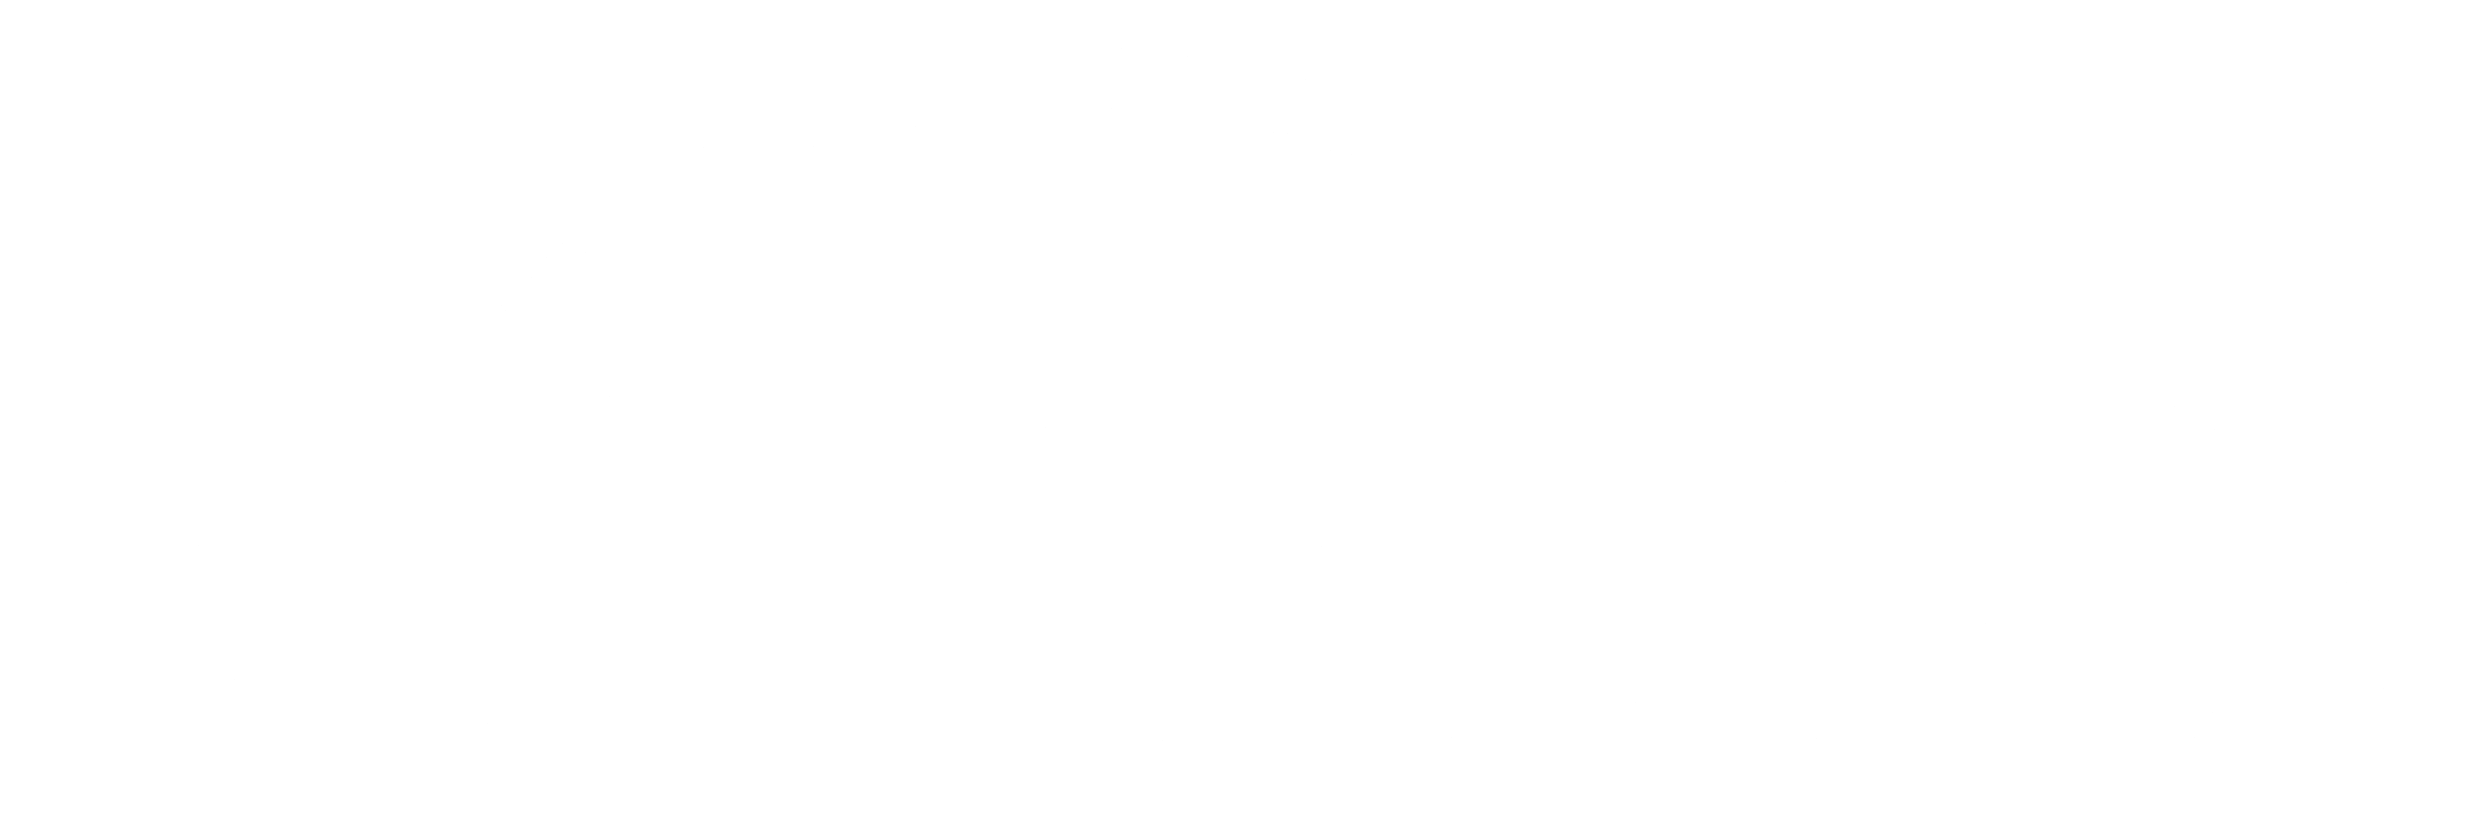 logo-Sutfene-2017-W.png